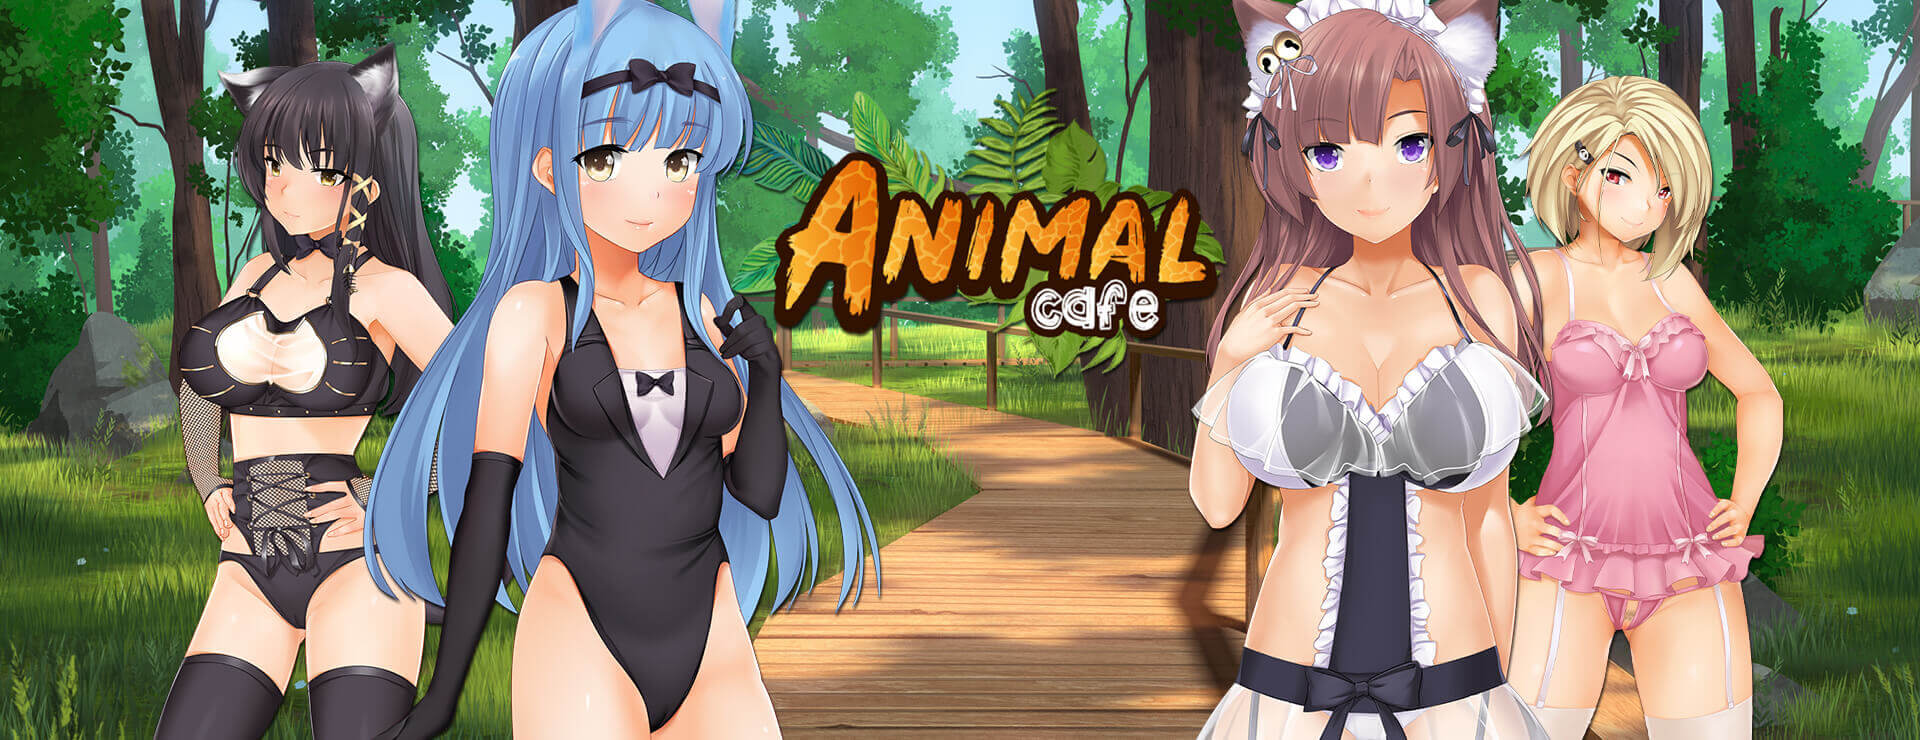 Animal Cafe - Novela Visual Juego